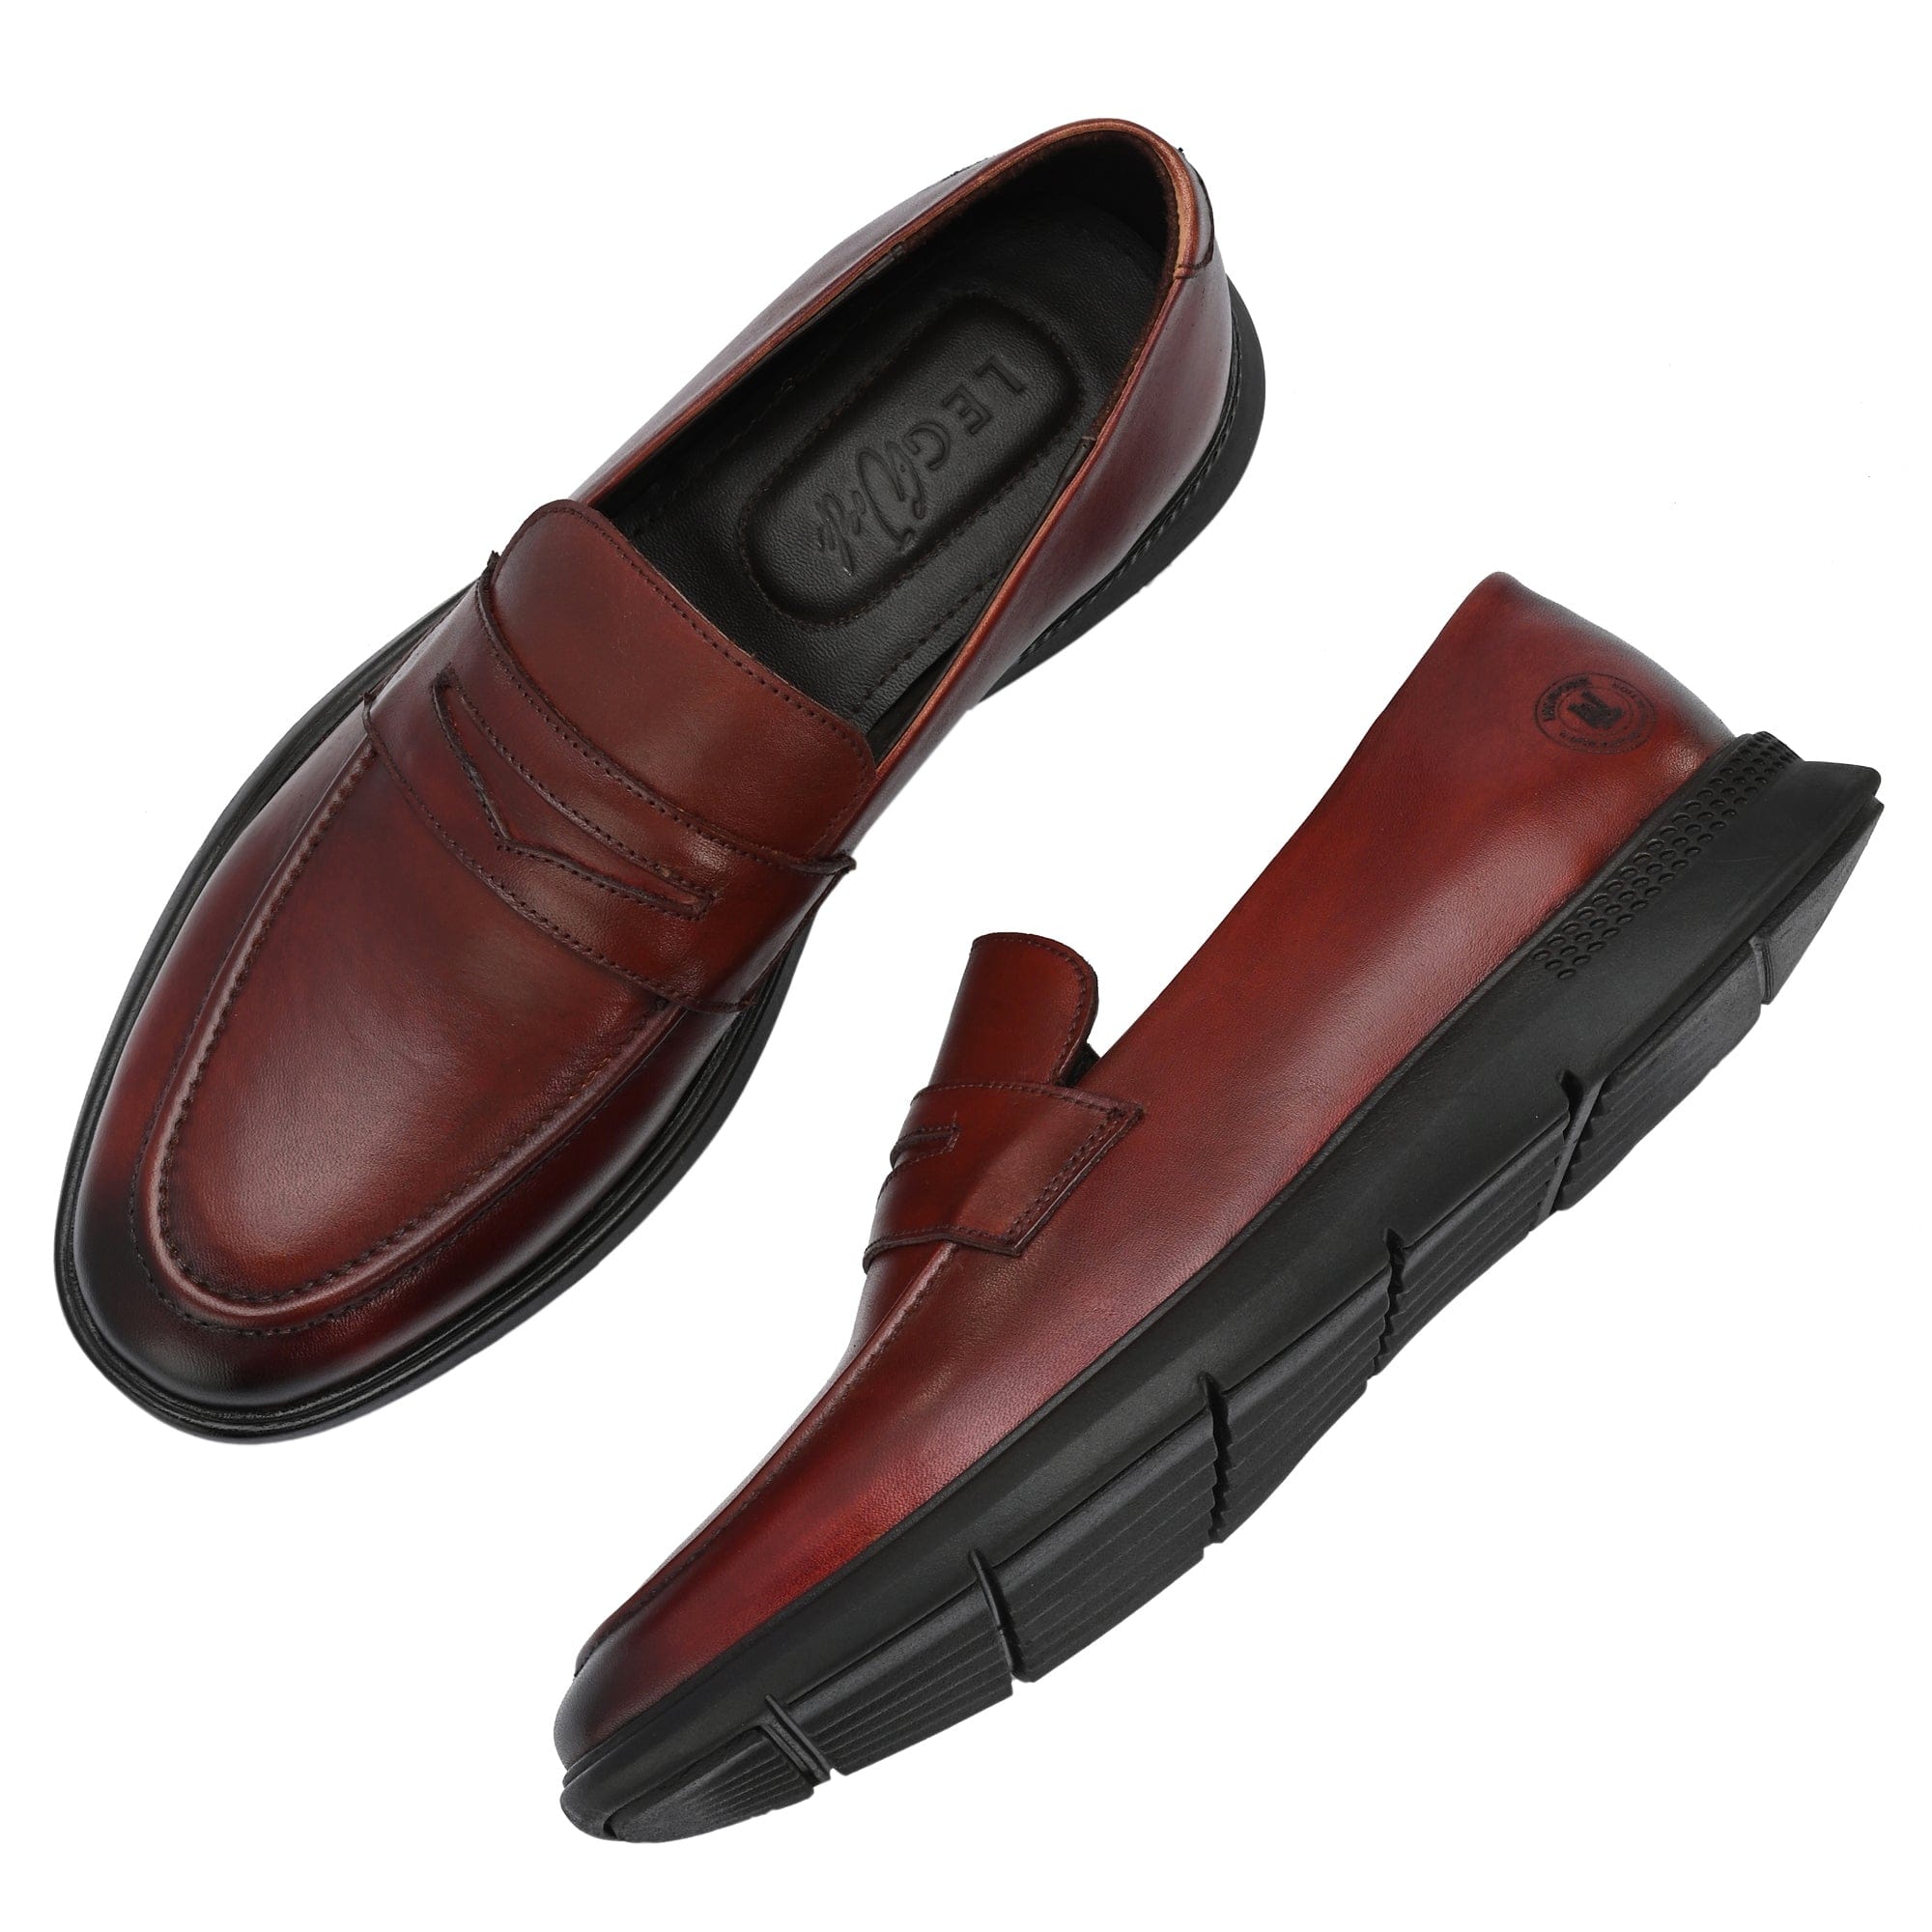 Legwork Loafer 2.0 Cognac Italian Leather Shoes 7UK